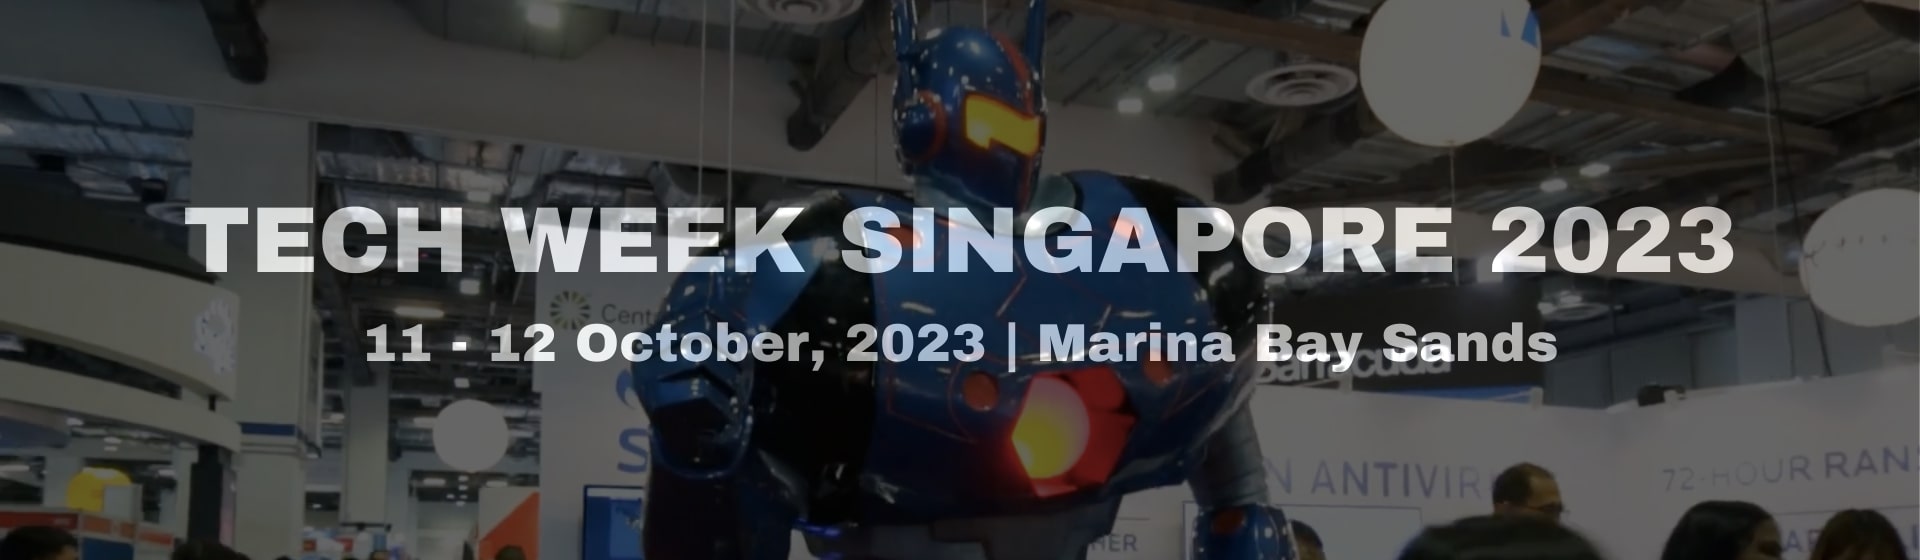 TECH WEEK SINGAPORE 2023